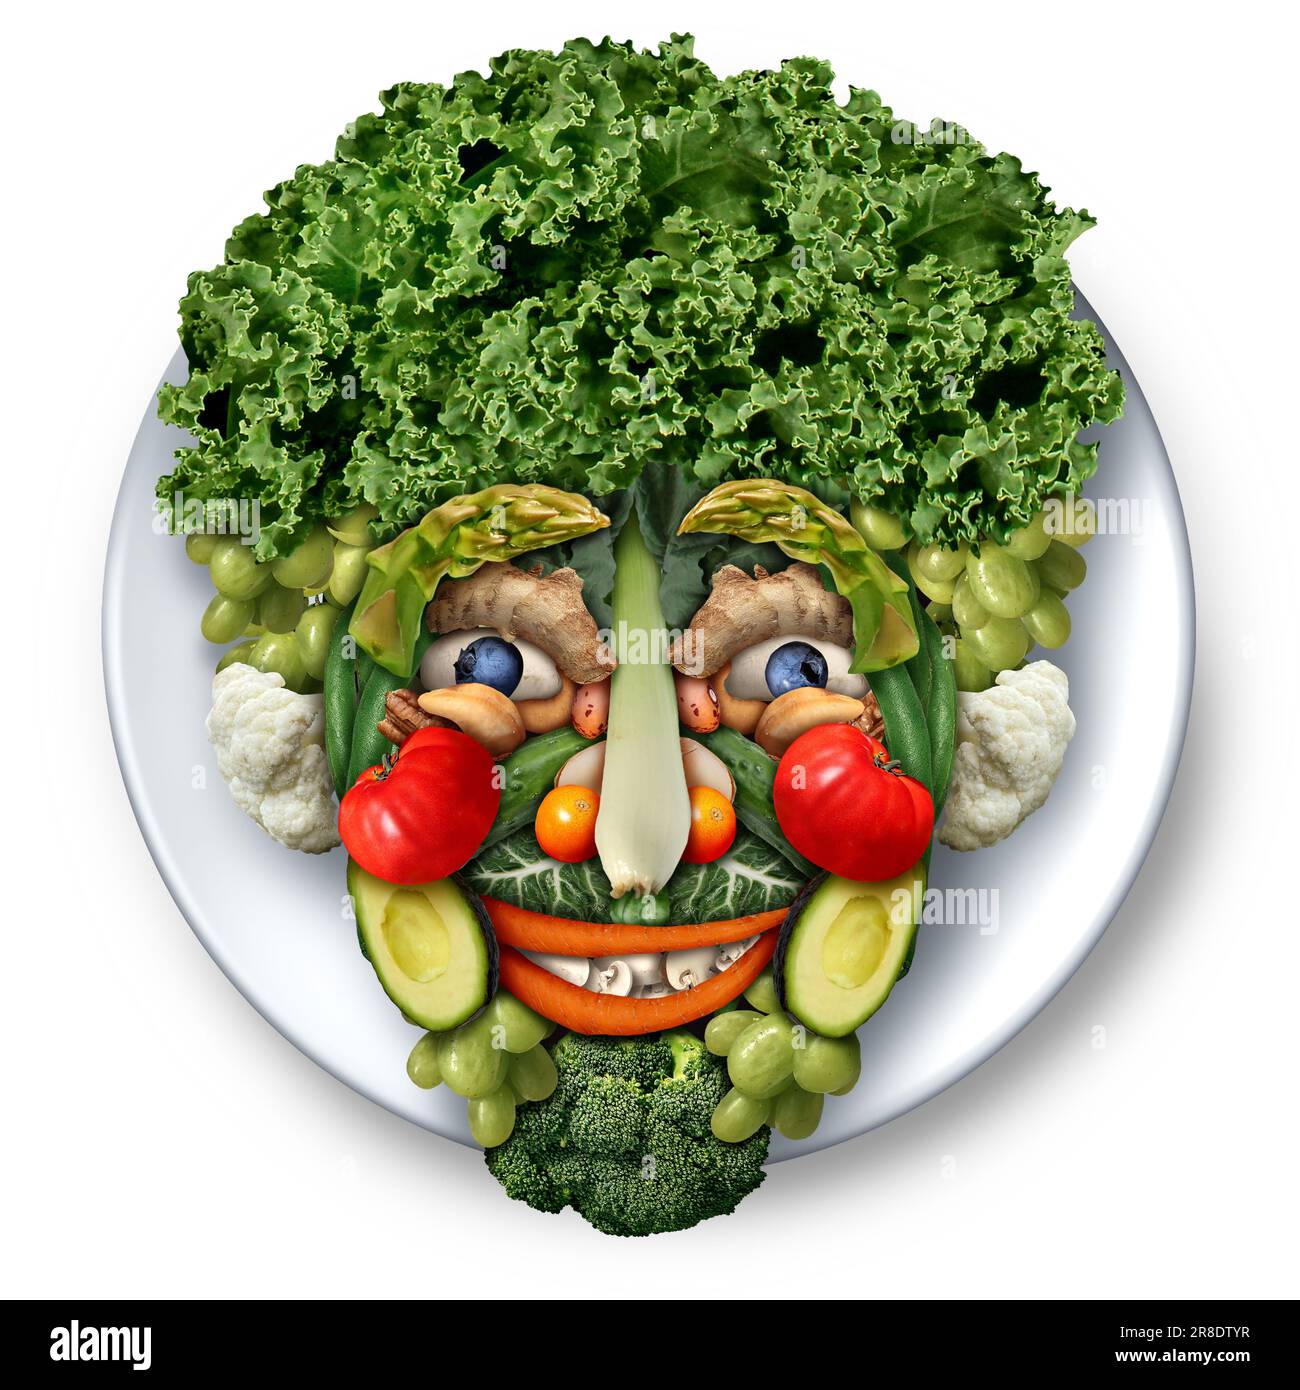 Food Sculpture Head as a vegan or vegetarian edible art or creative food sculptures shaped as a face. Stock Photo